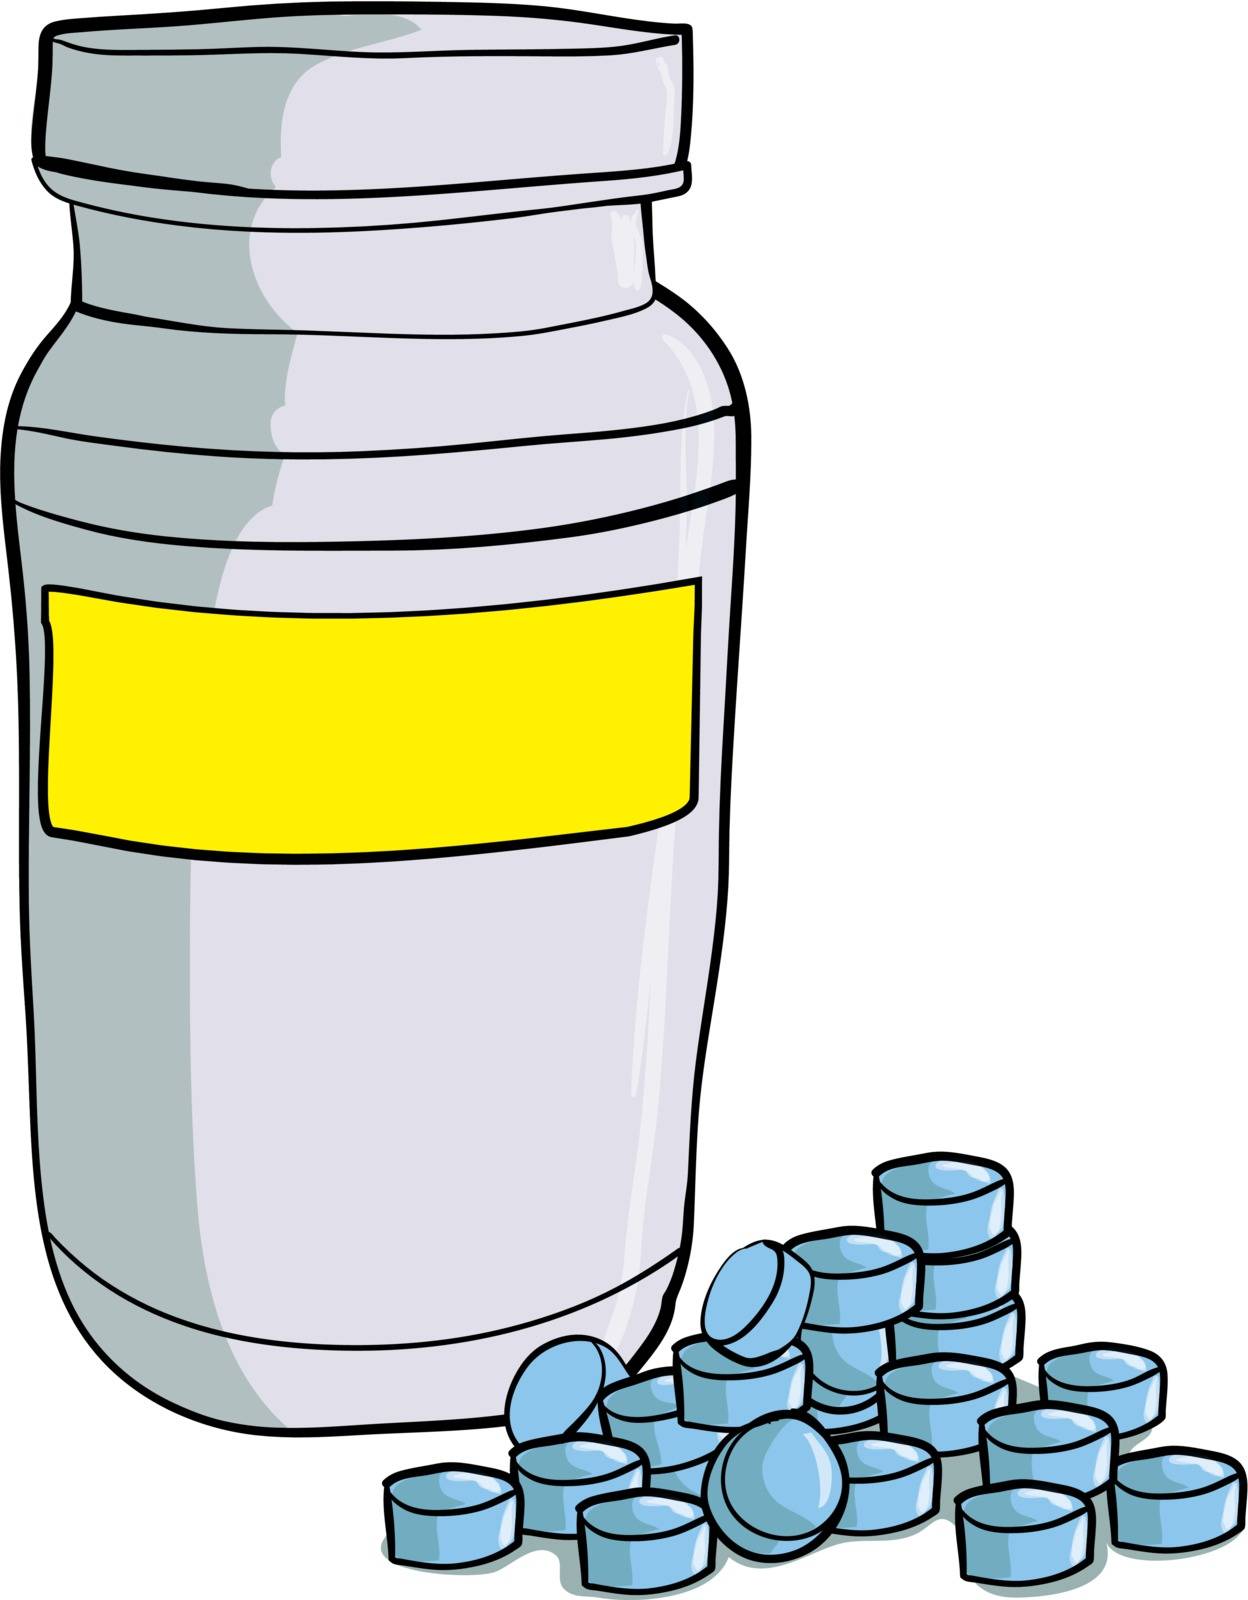 Bottle of medicinal pills by antonbrand